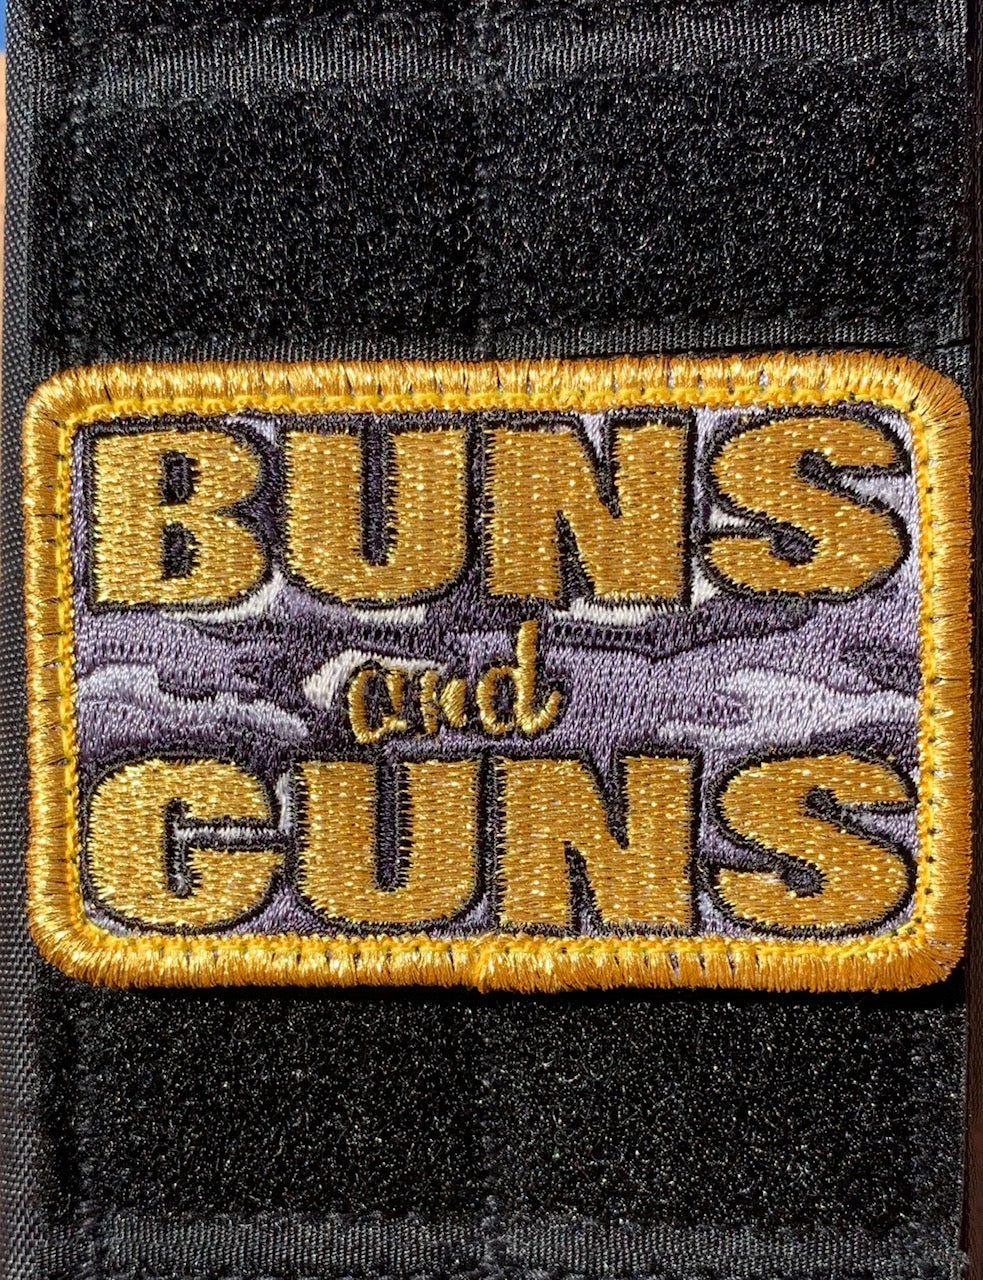 Buns and Guns Patch